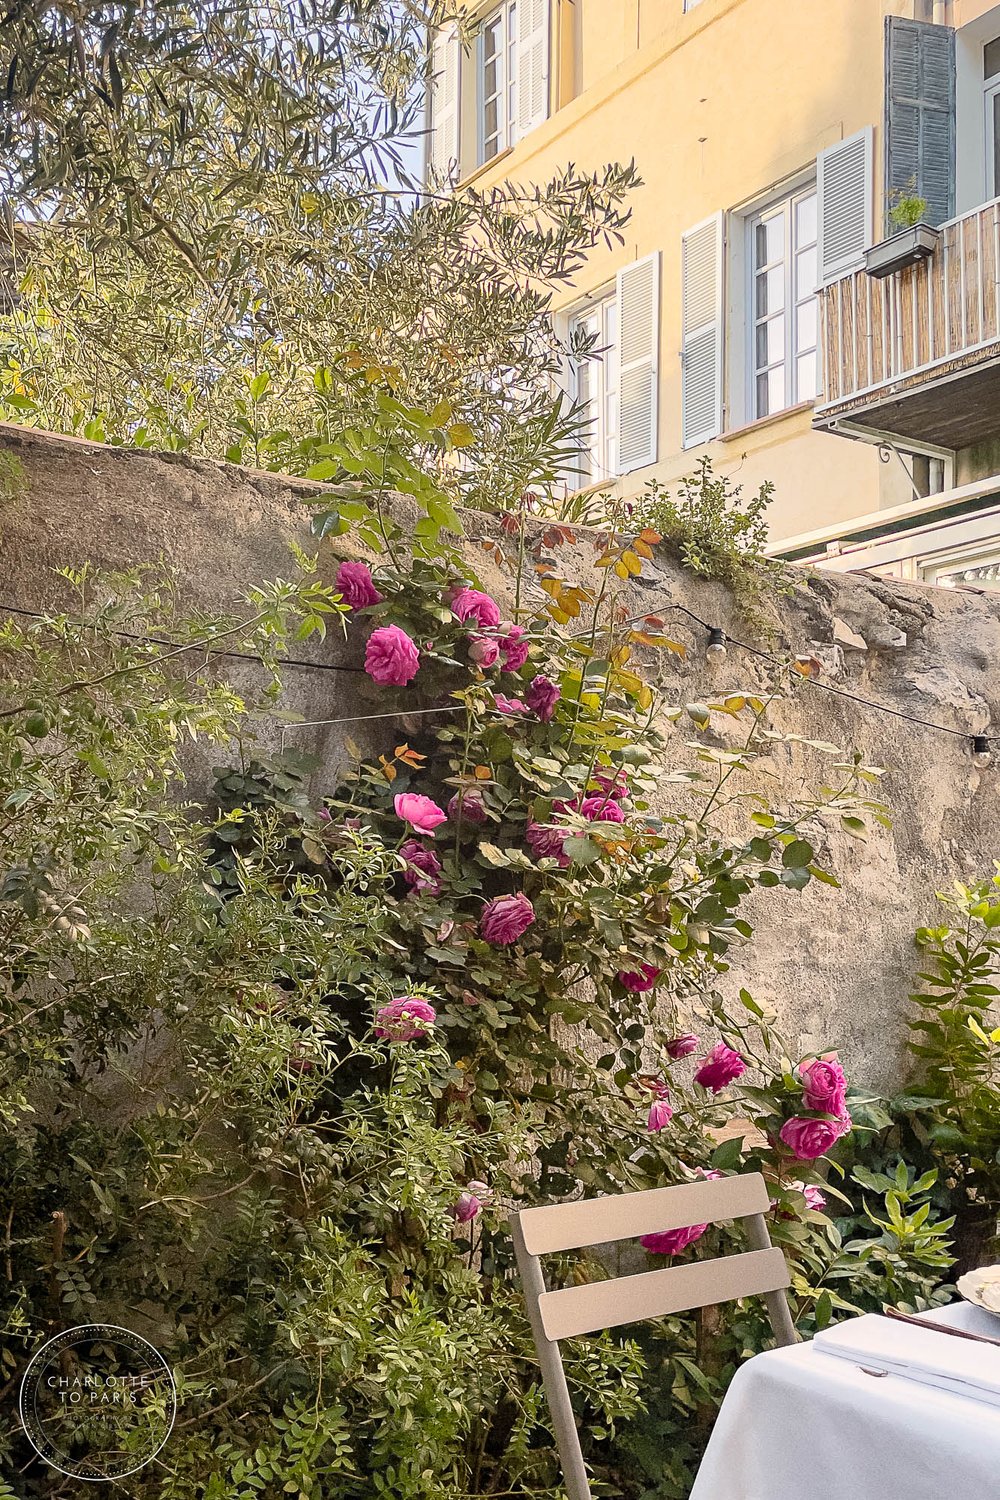 rambling rose vines climb the stone wall